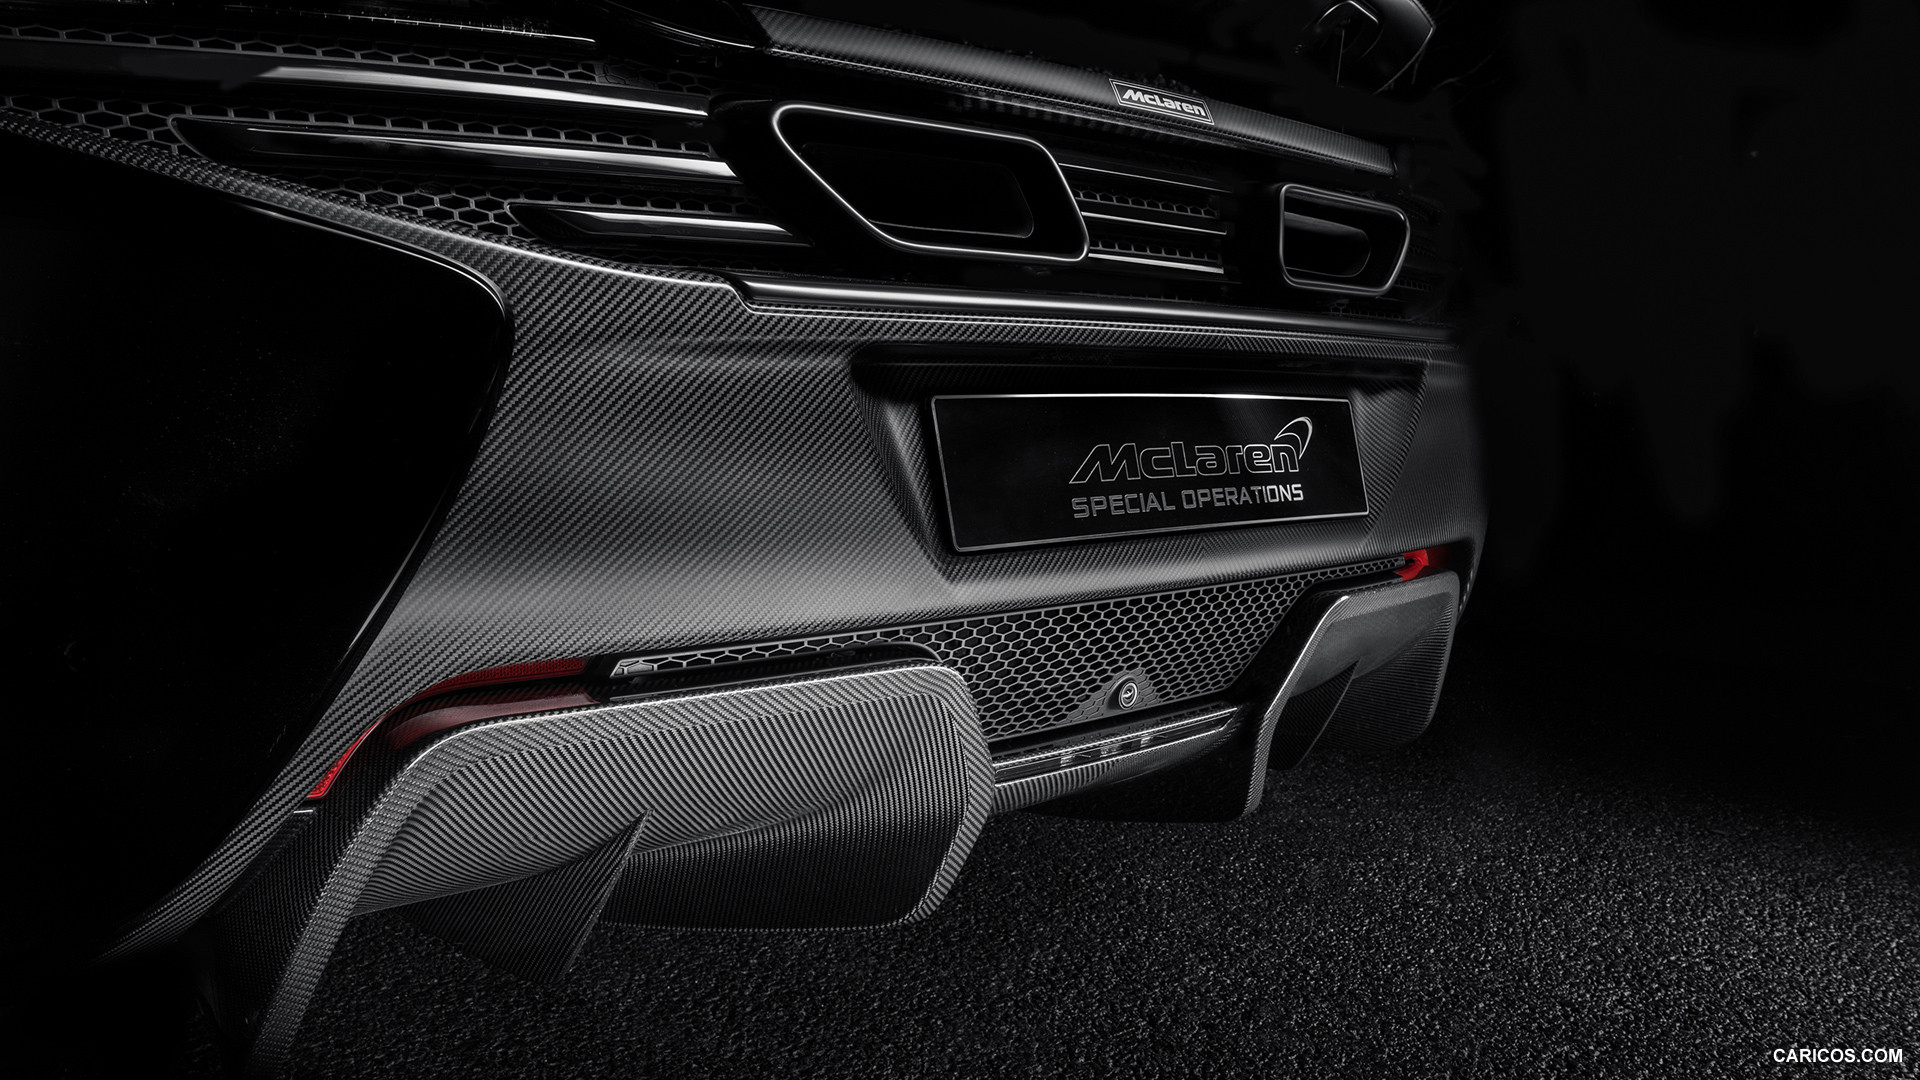 2014 McLaren 650S Coupe MSO Concept  - Rear, #4 of 7